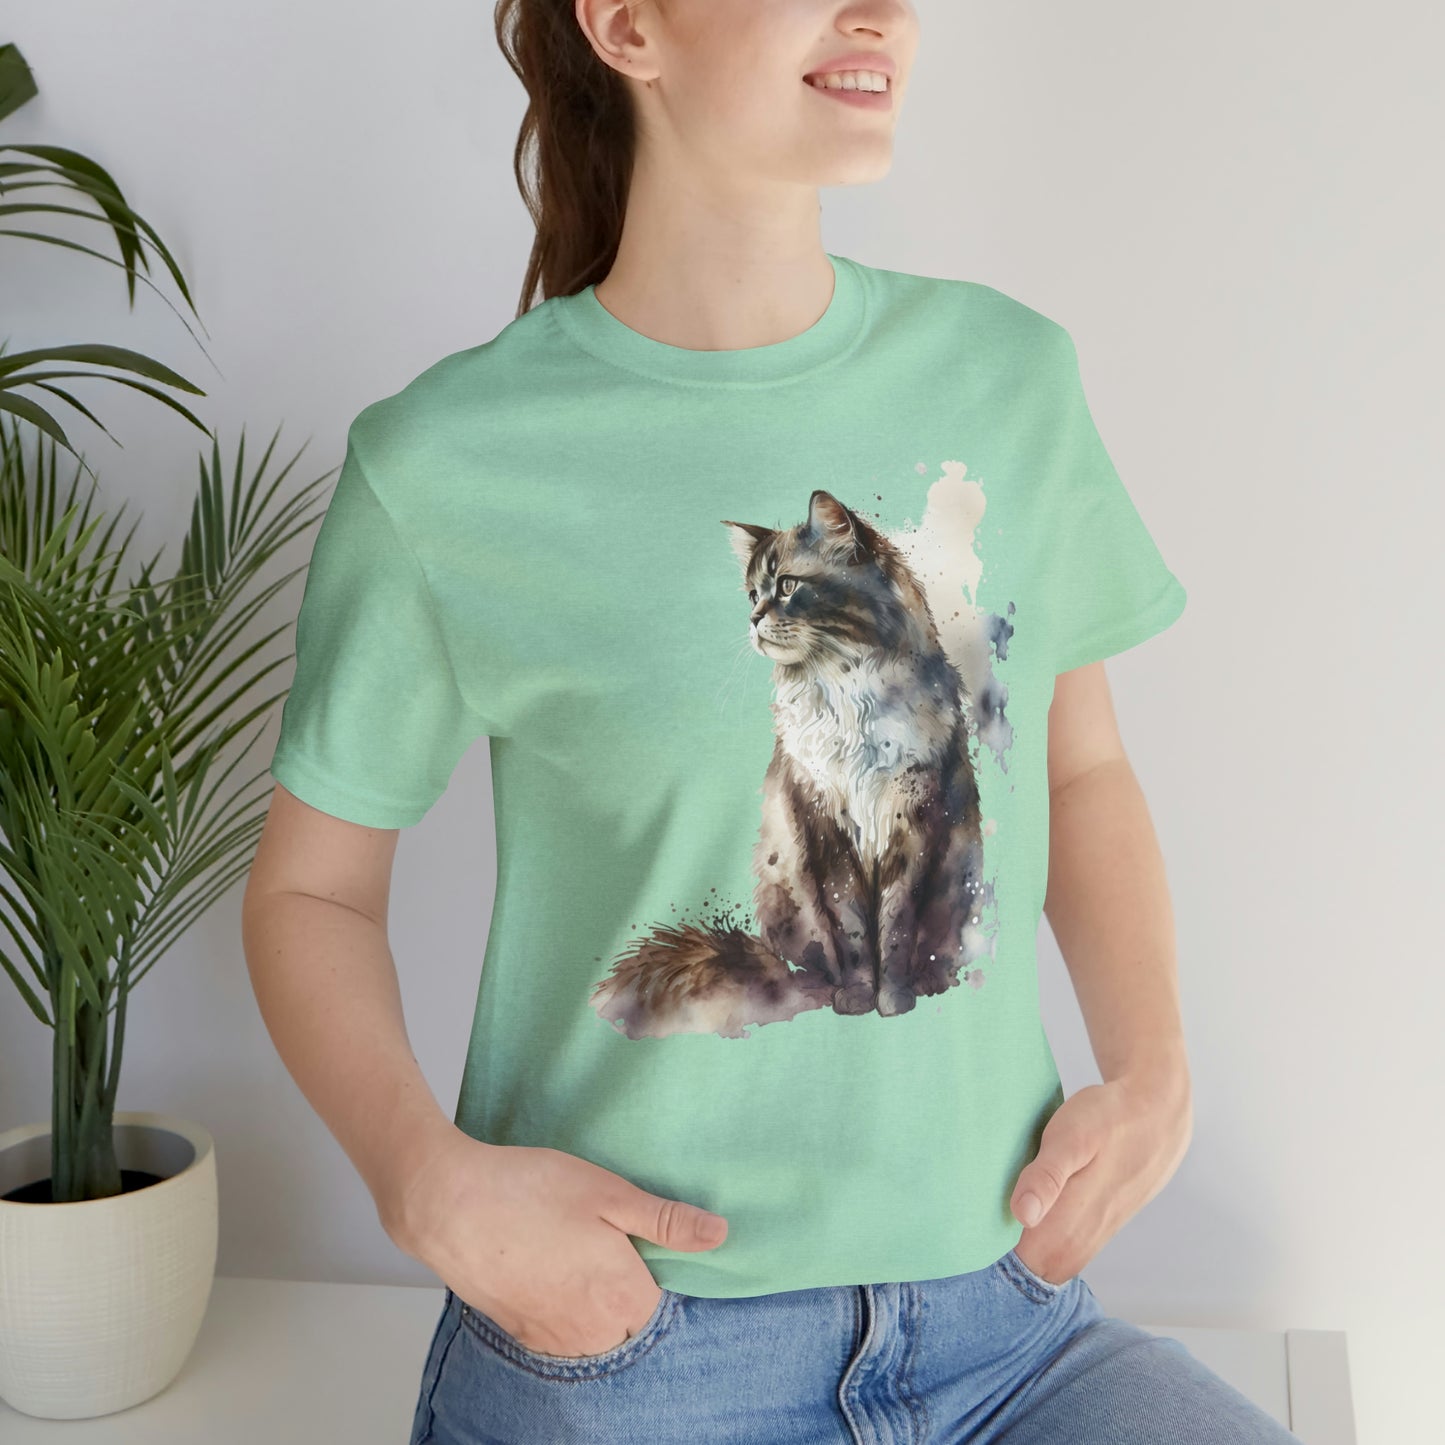 Watercolor Cat T shirt, Cute cat shirt, Watercolor Kitty shirt, kitty cuteness art shirt, Cat Illustration shirt, Colorful Boho Cats tshirt